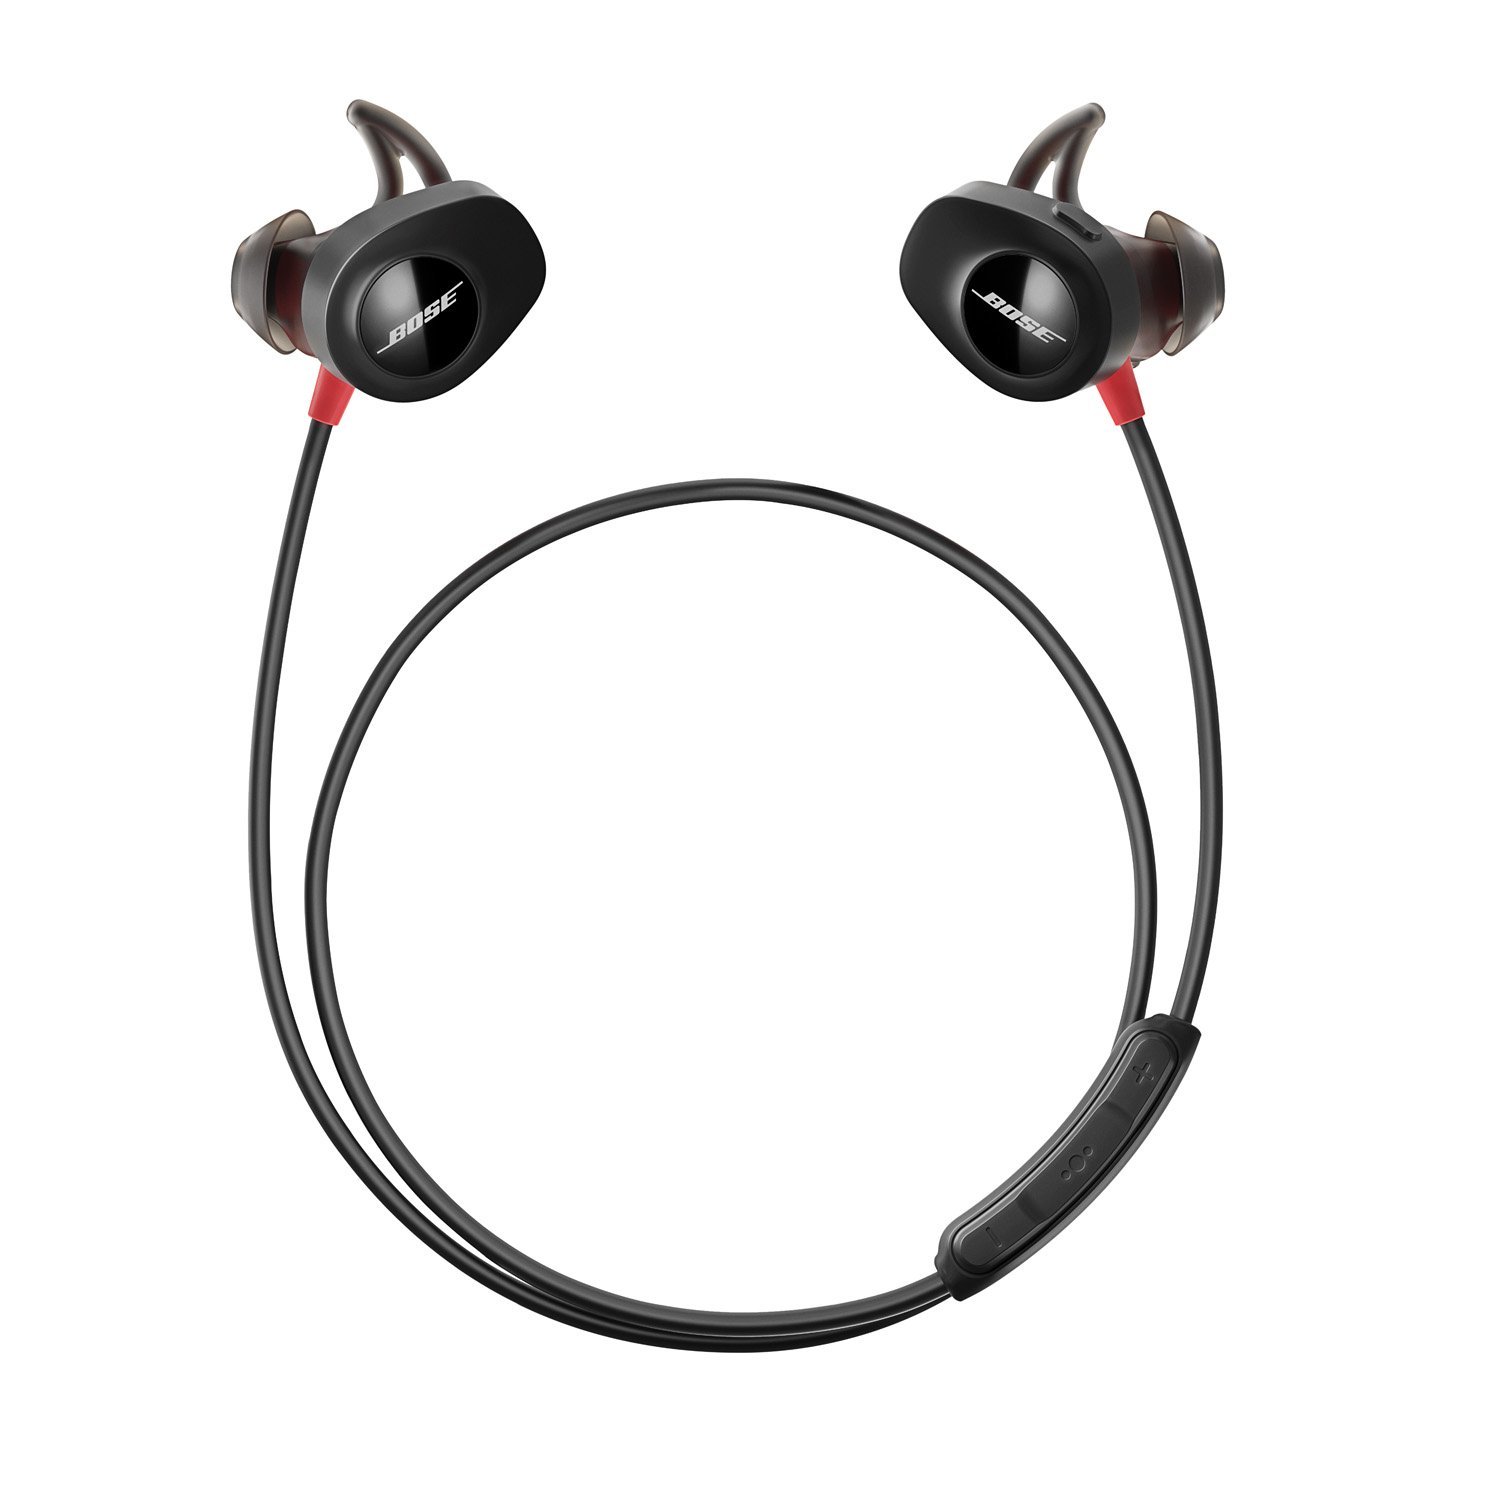 bose-soundsport-pulse-wireless-headphones